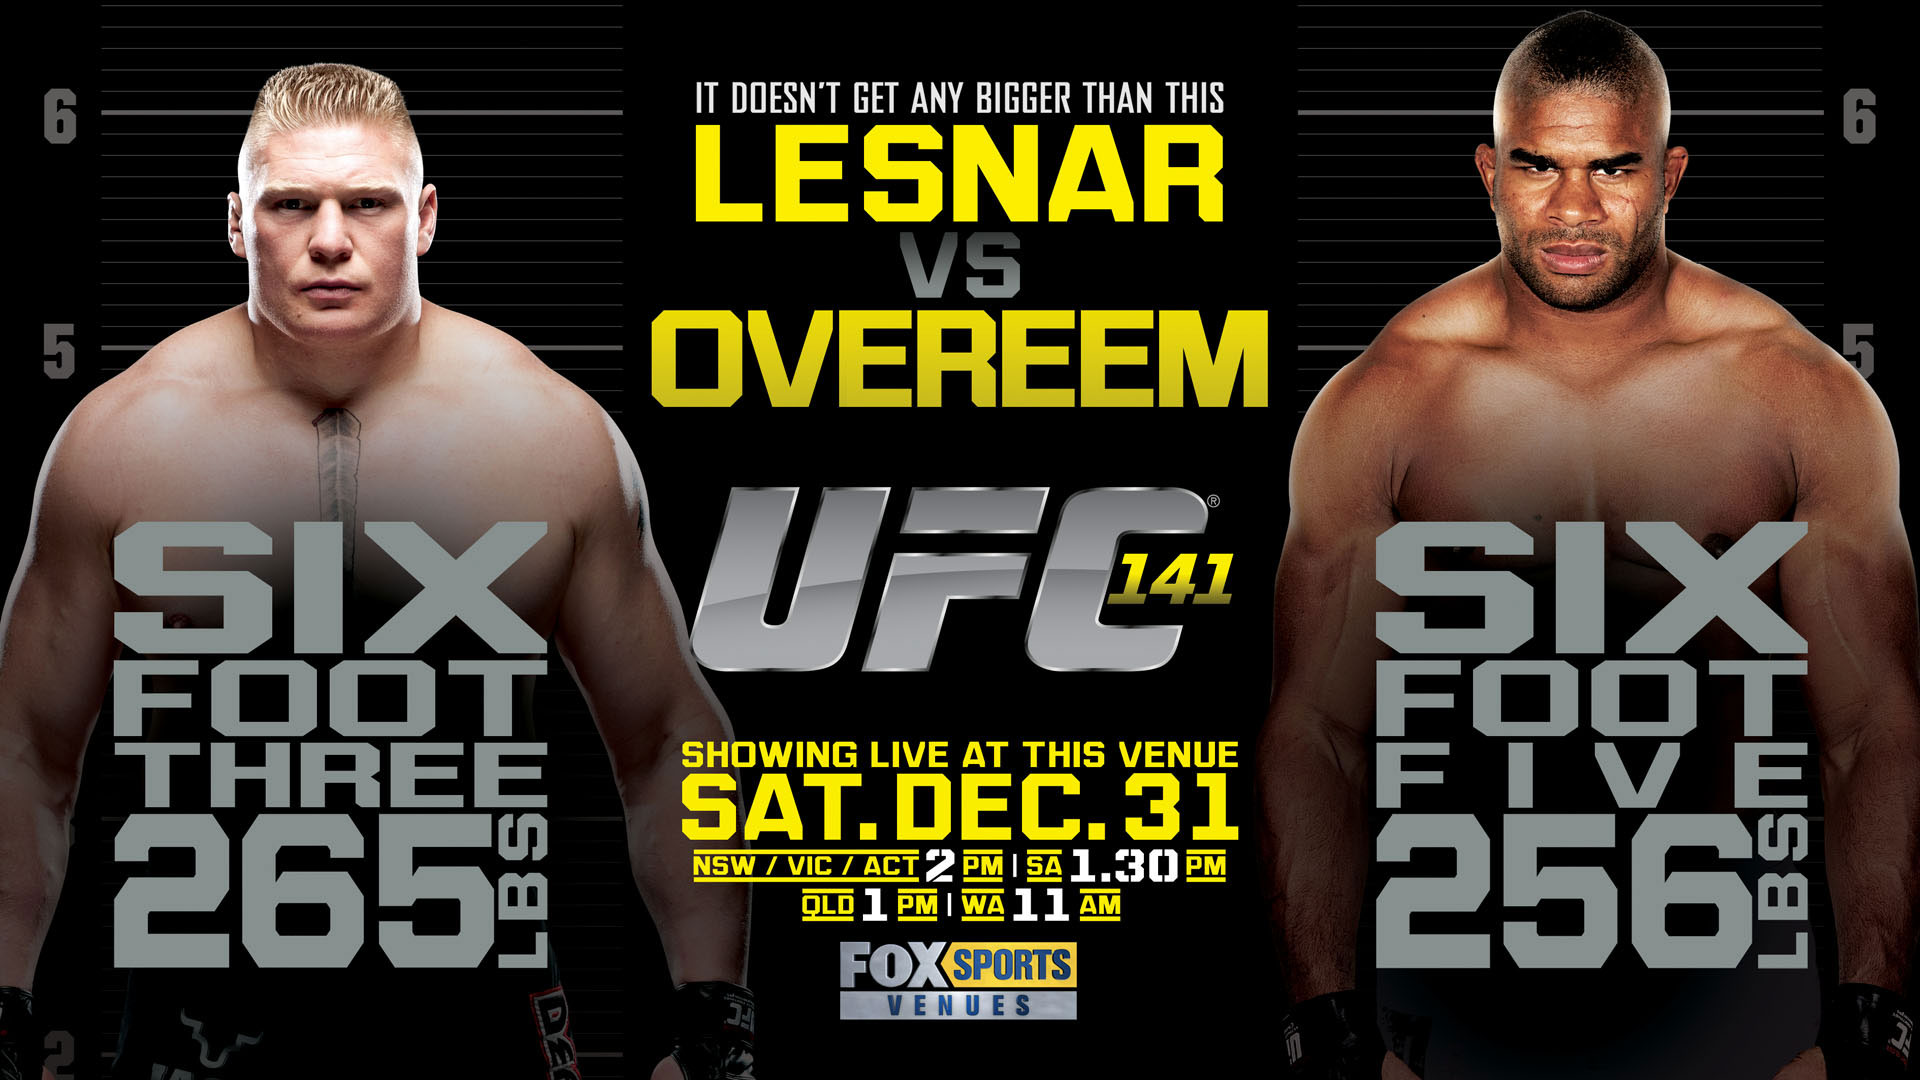 Poster/affiche UFC 141